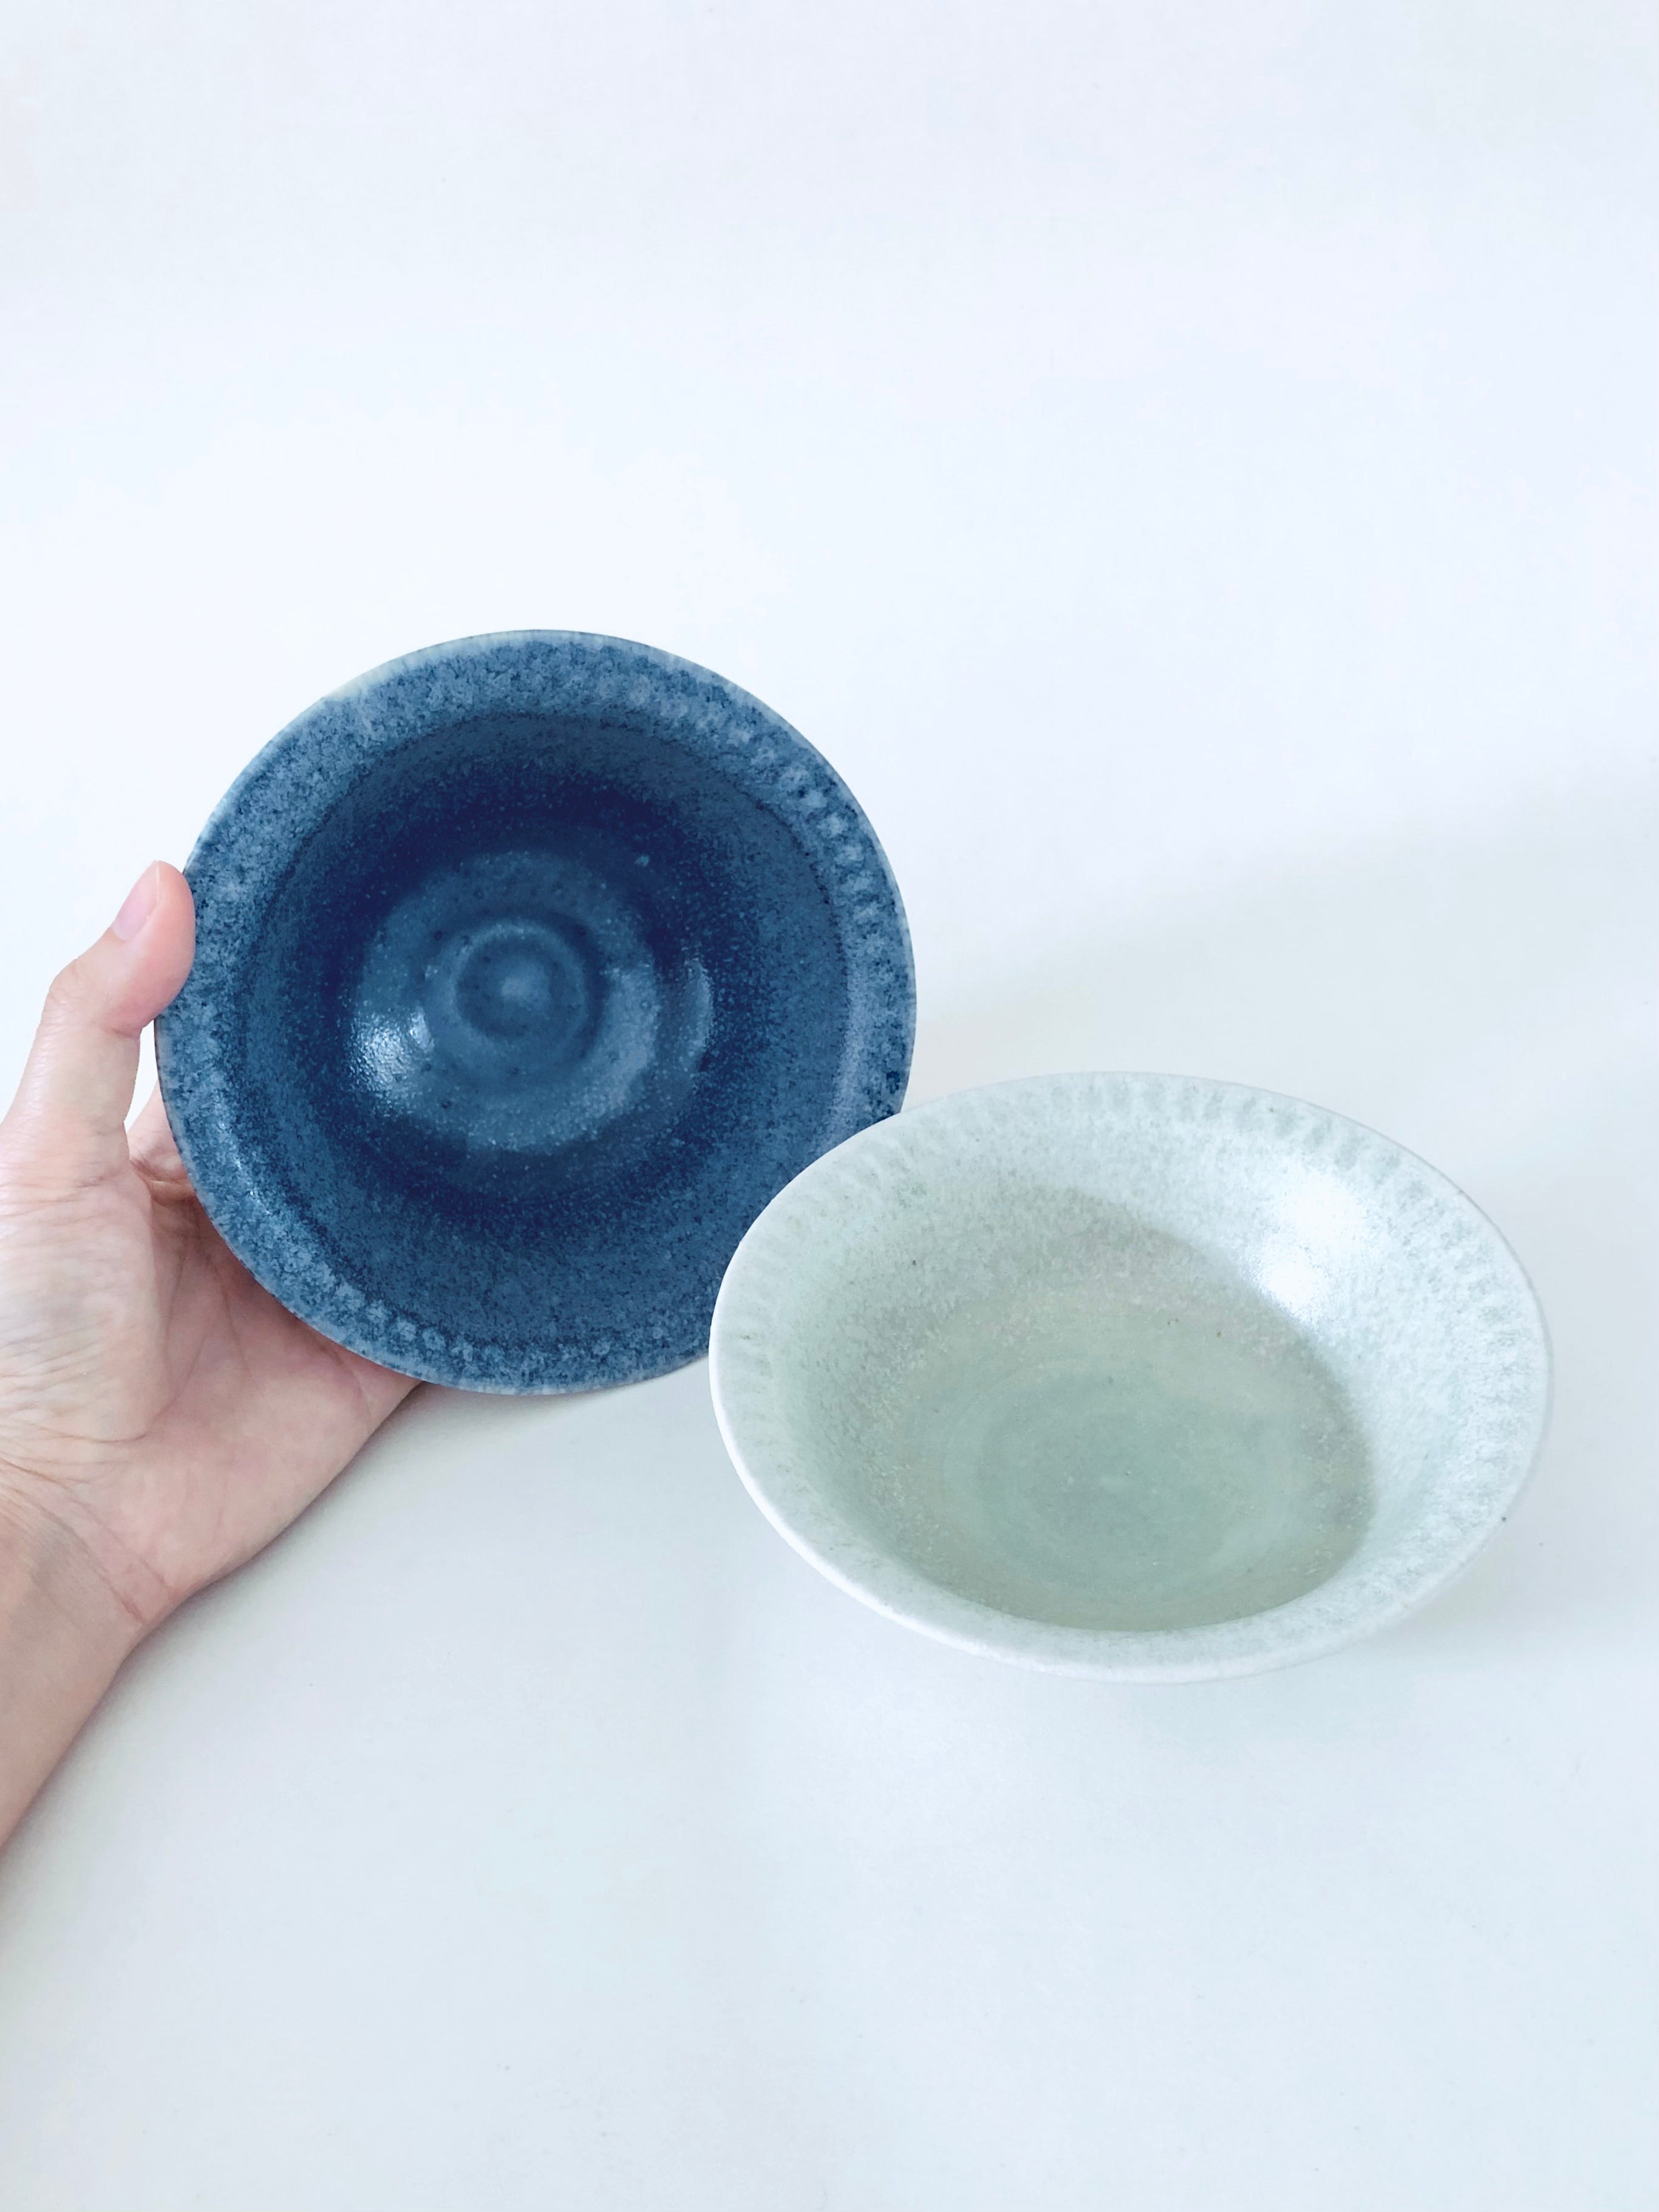 Rimy Green Bowls by Vivian Lam